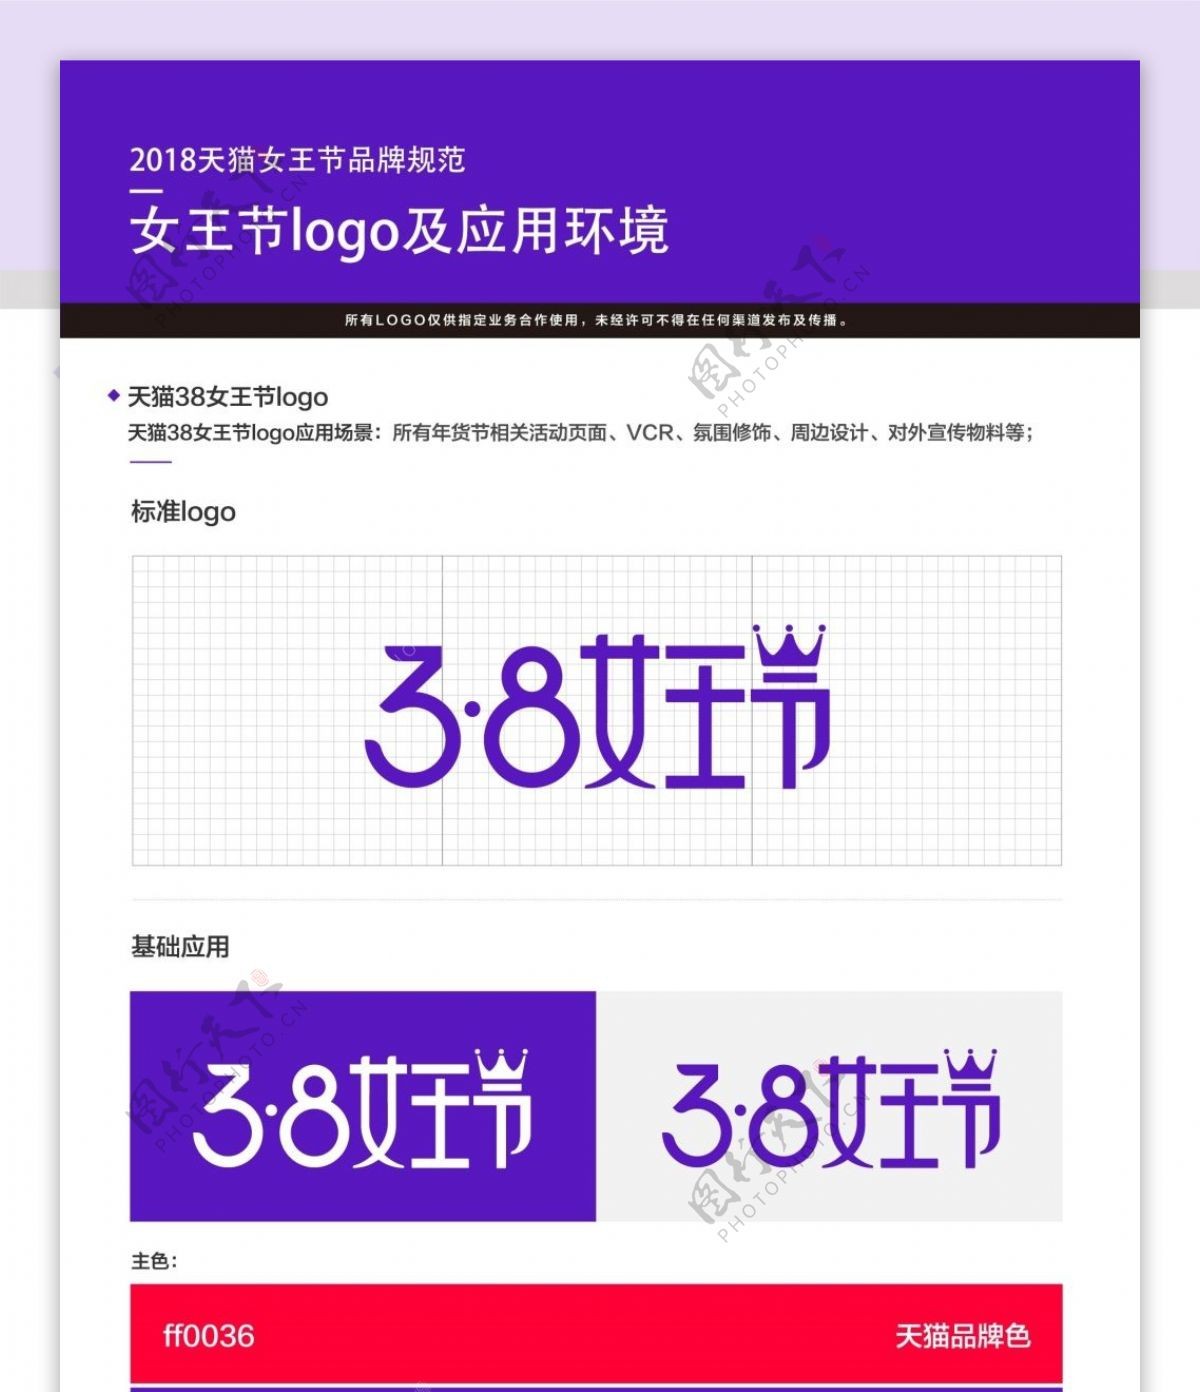 2018天猫38女王节logo